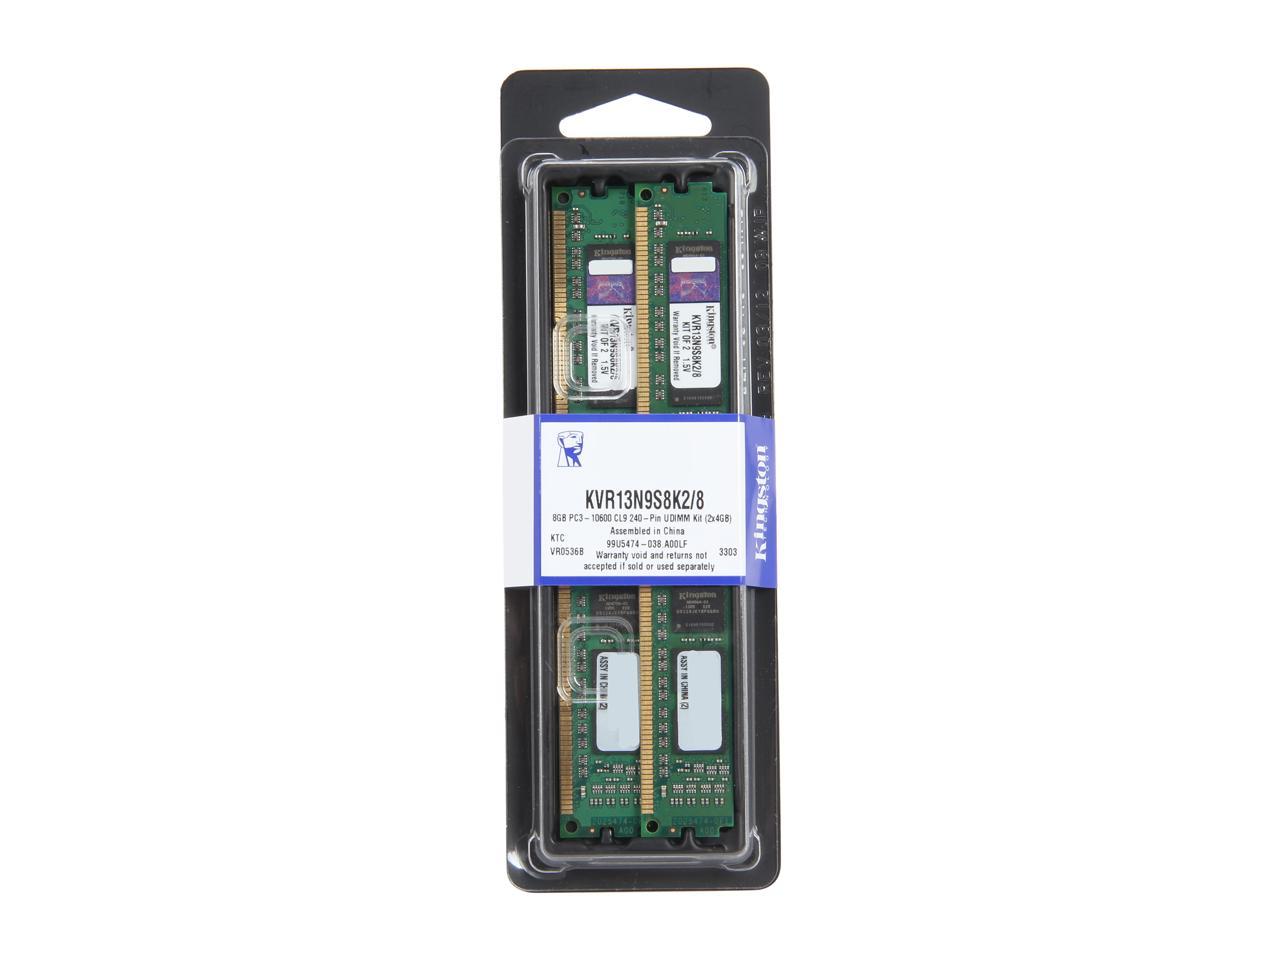 Kingston 8GB (2 x 4GB) 240-Pin DDR3 SDRAM DDR3 1333 Desktop Memory Model KVR13N9S8K2/8